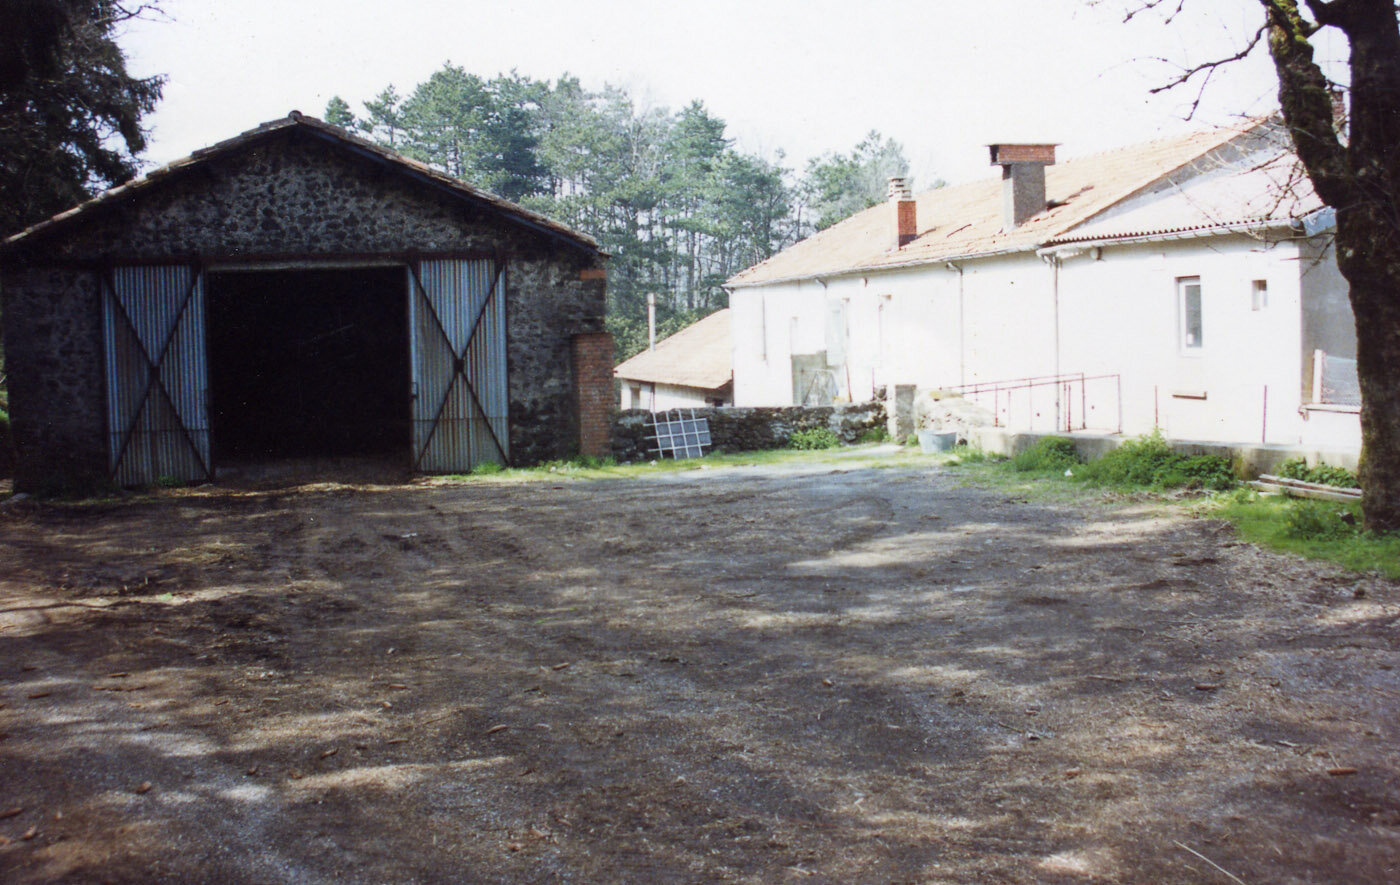  Barn before renovation 